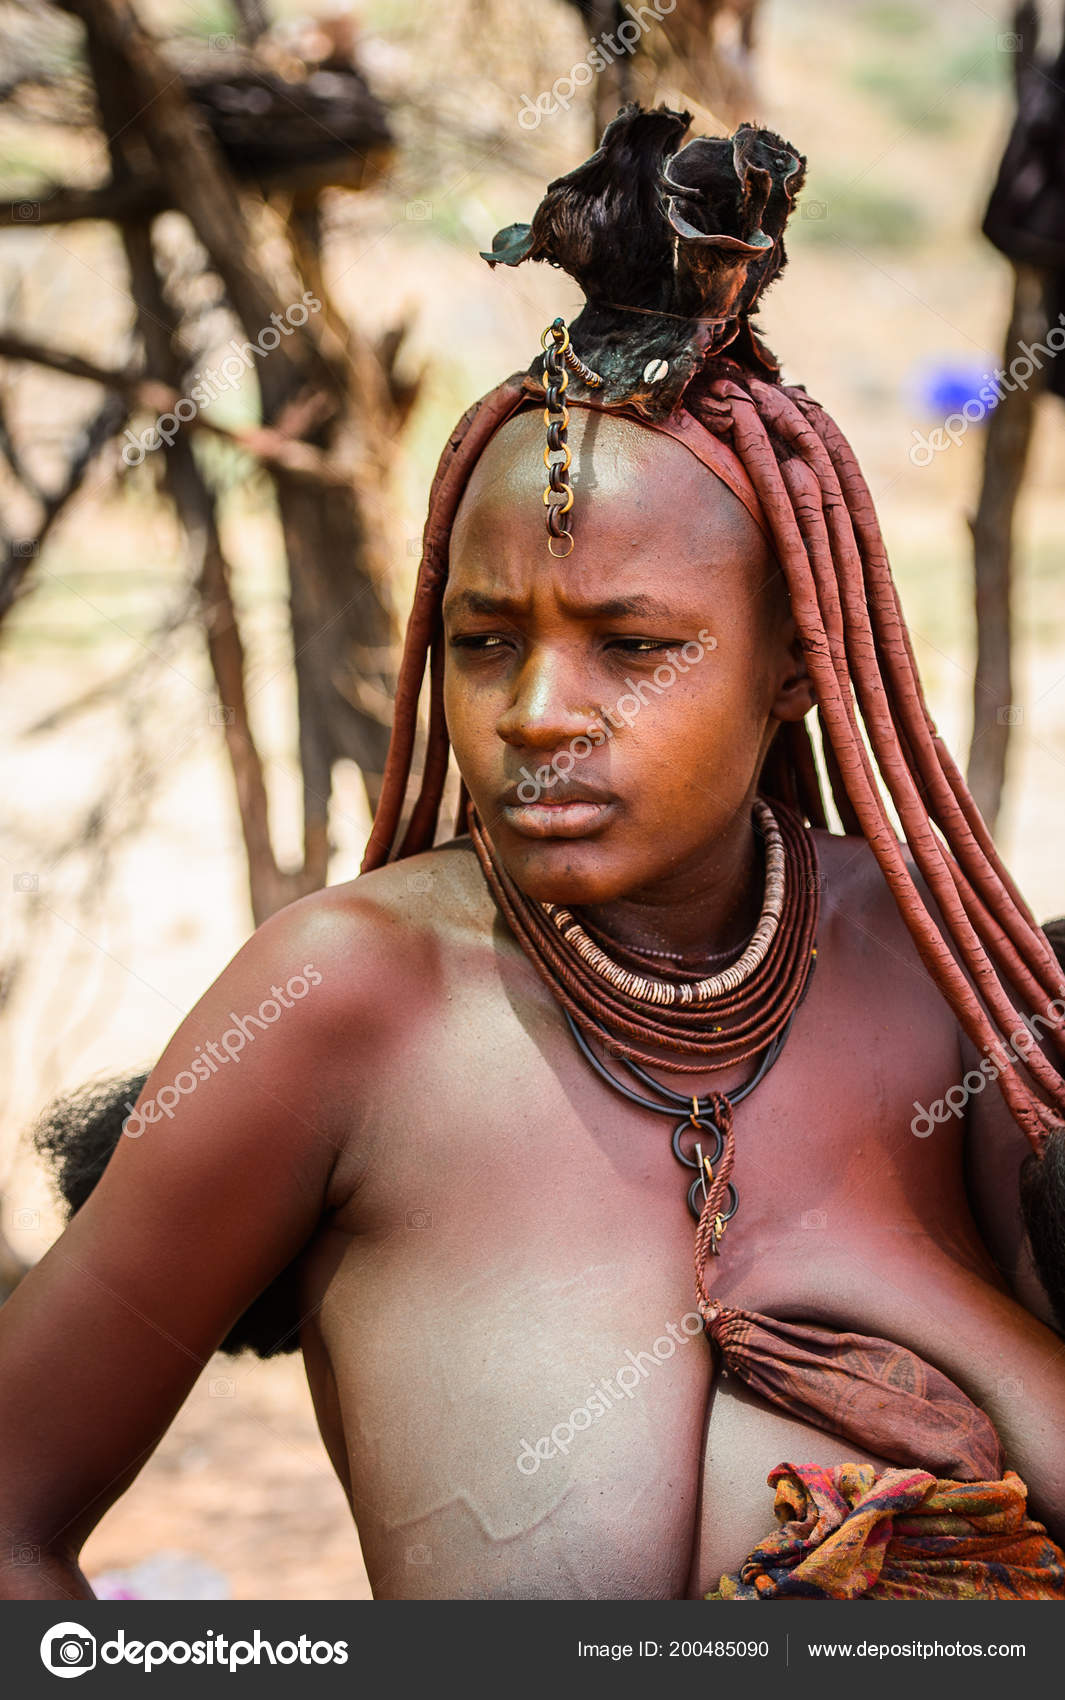 Himba Images Royalty Free Stock Himba Photos Pictures Depositphotos